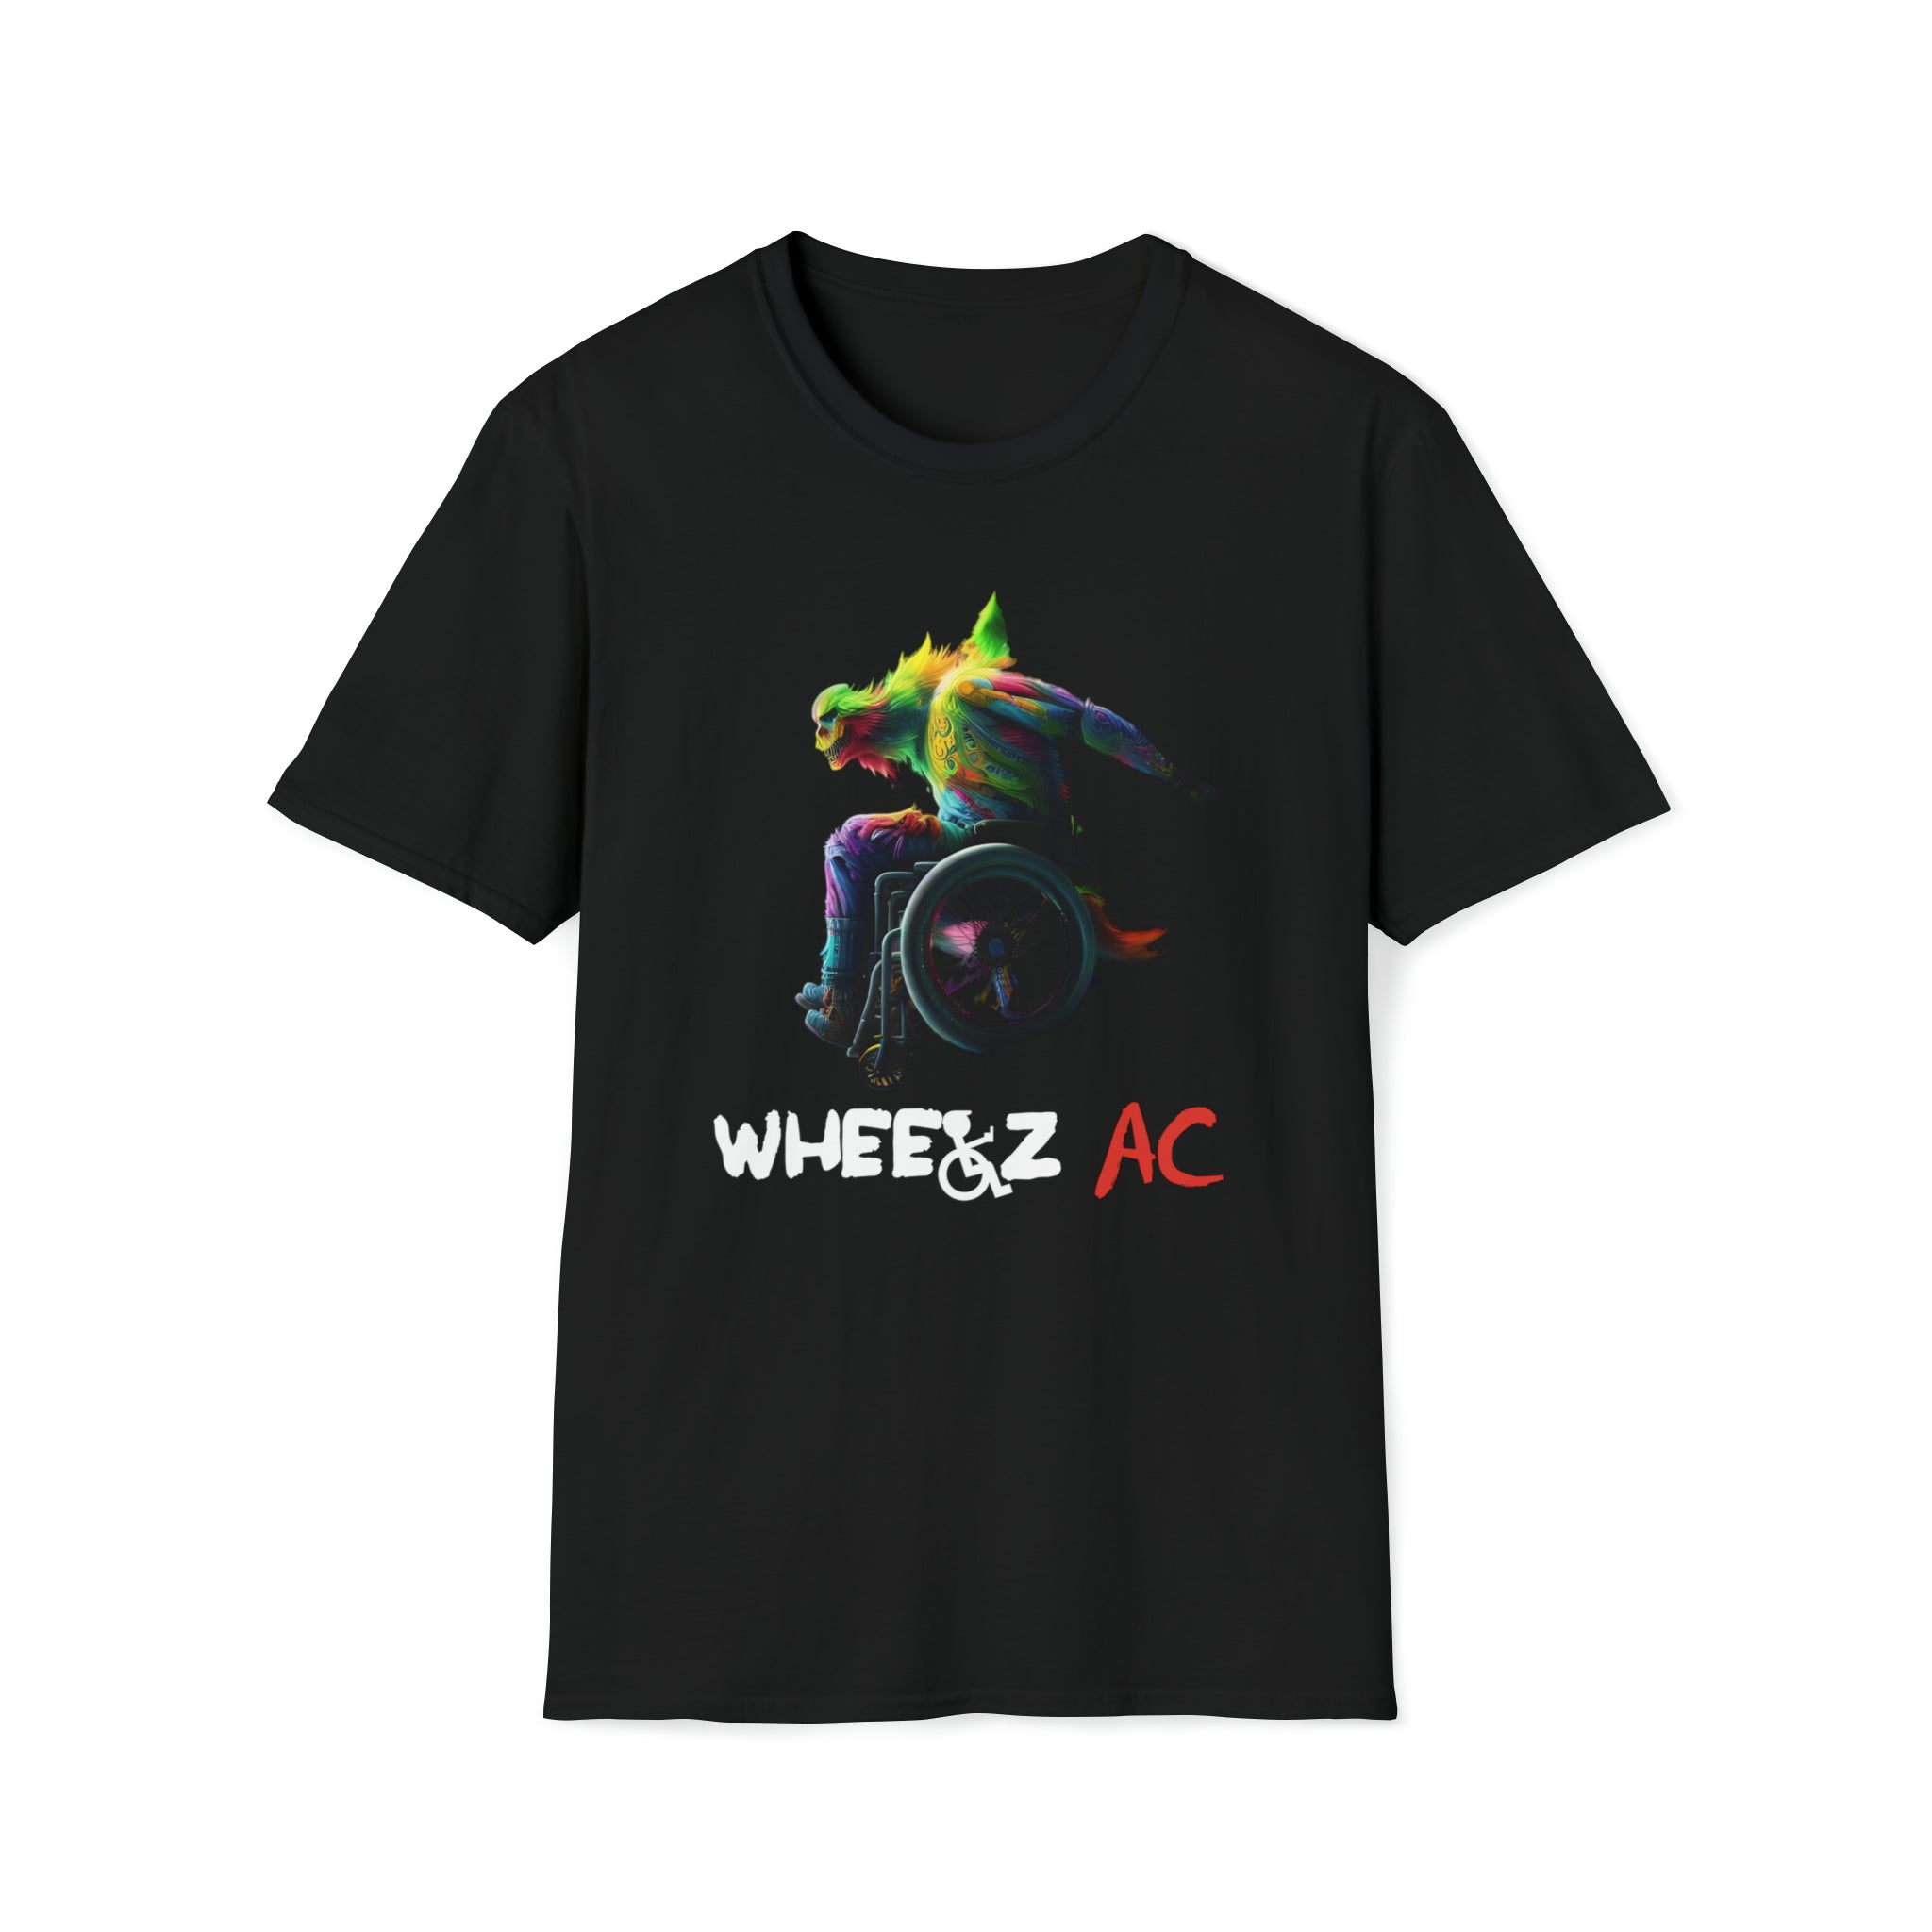 Demon Wheelz AC t-shirt, black tee, wheelchair shirt